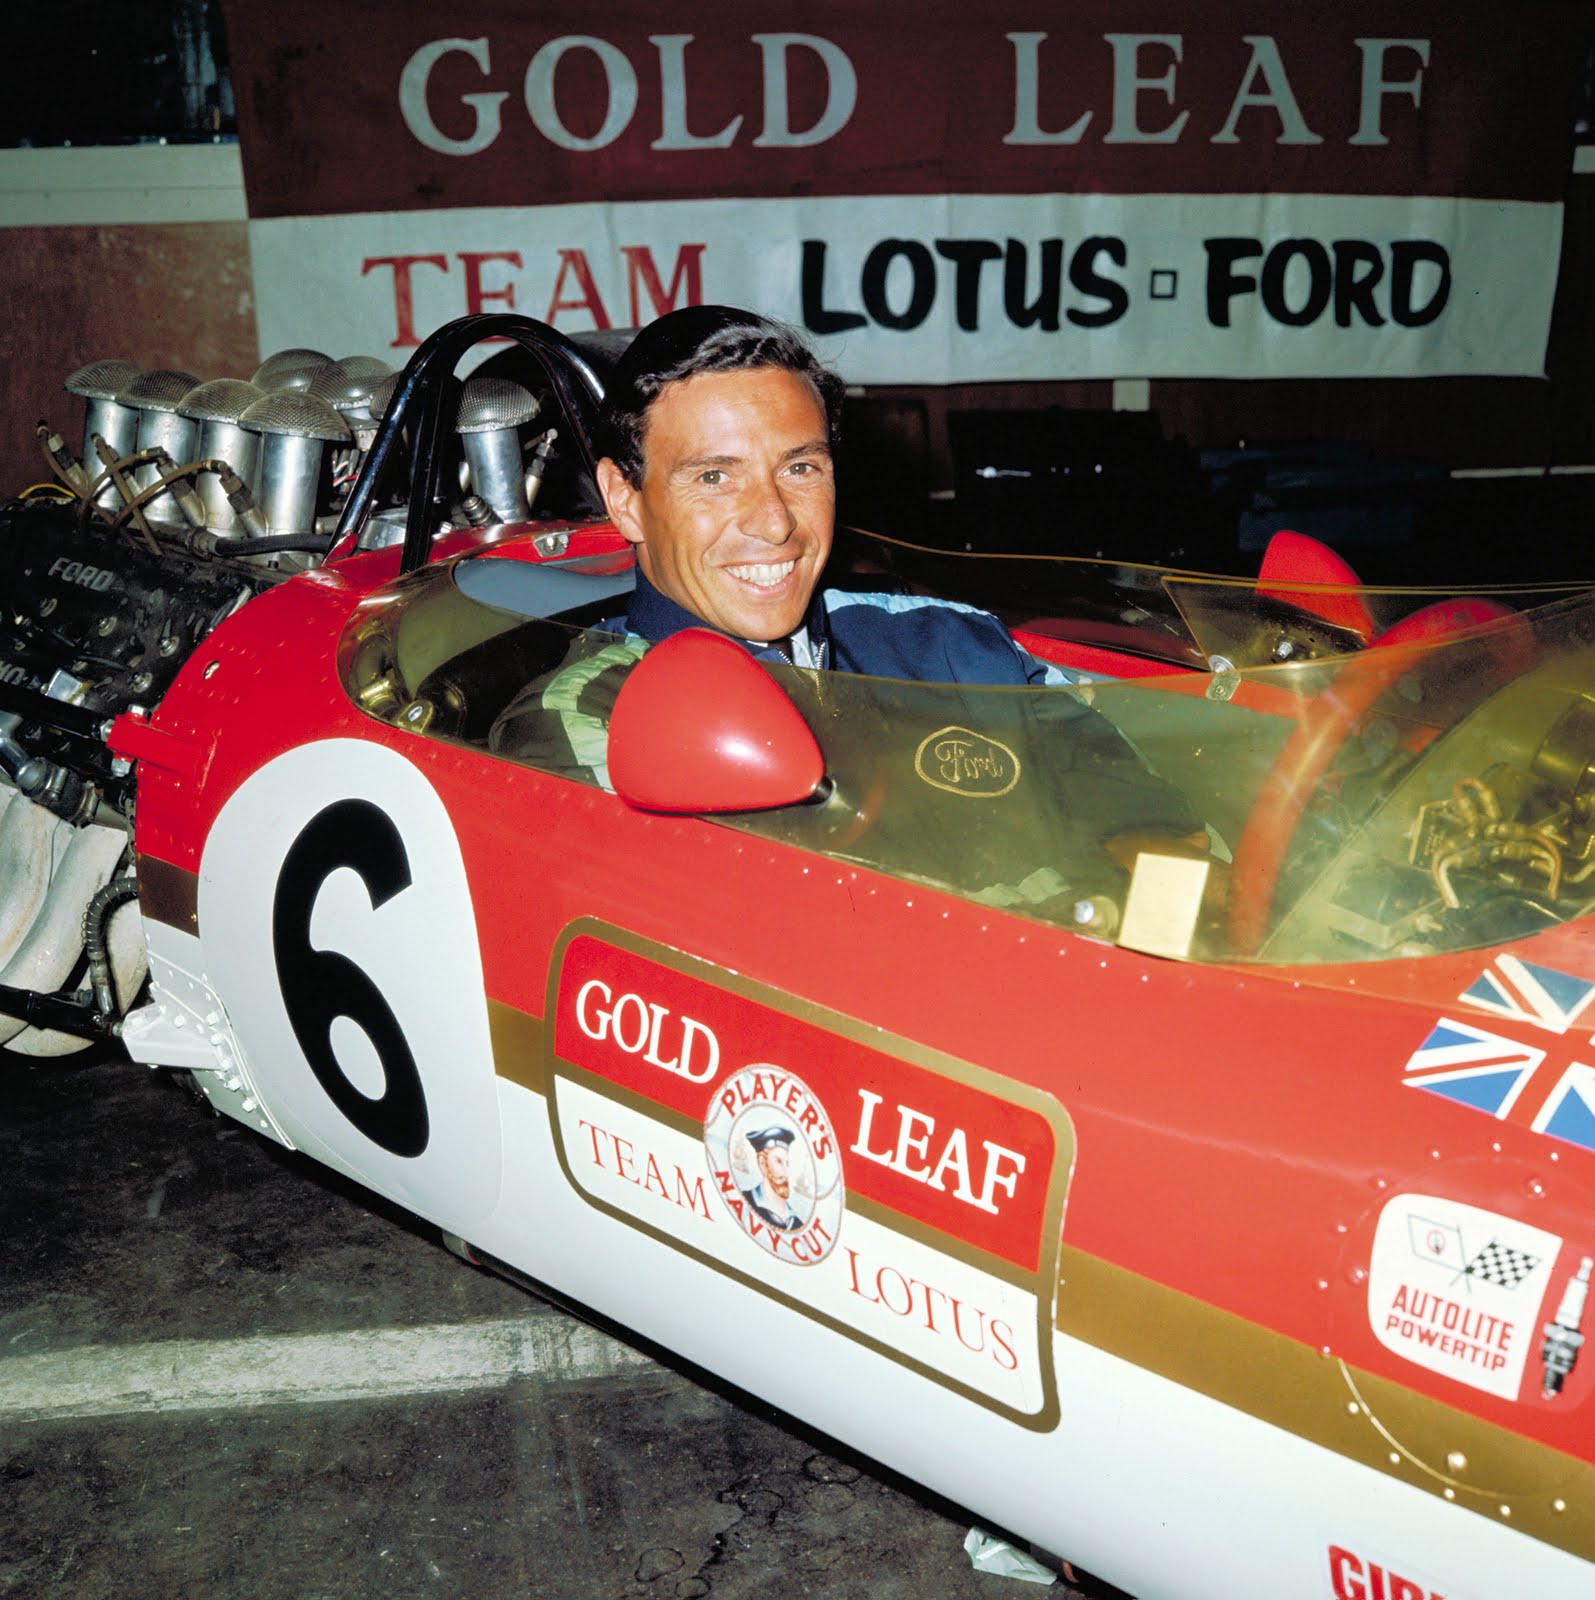 002 Gold Leaf Team Lotus.jpg